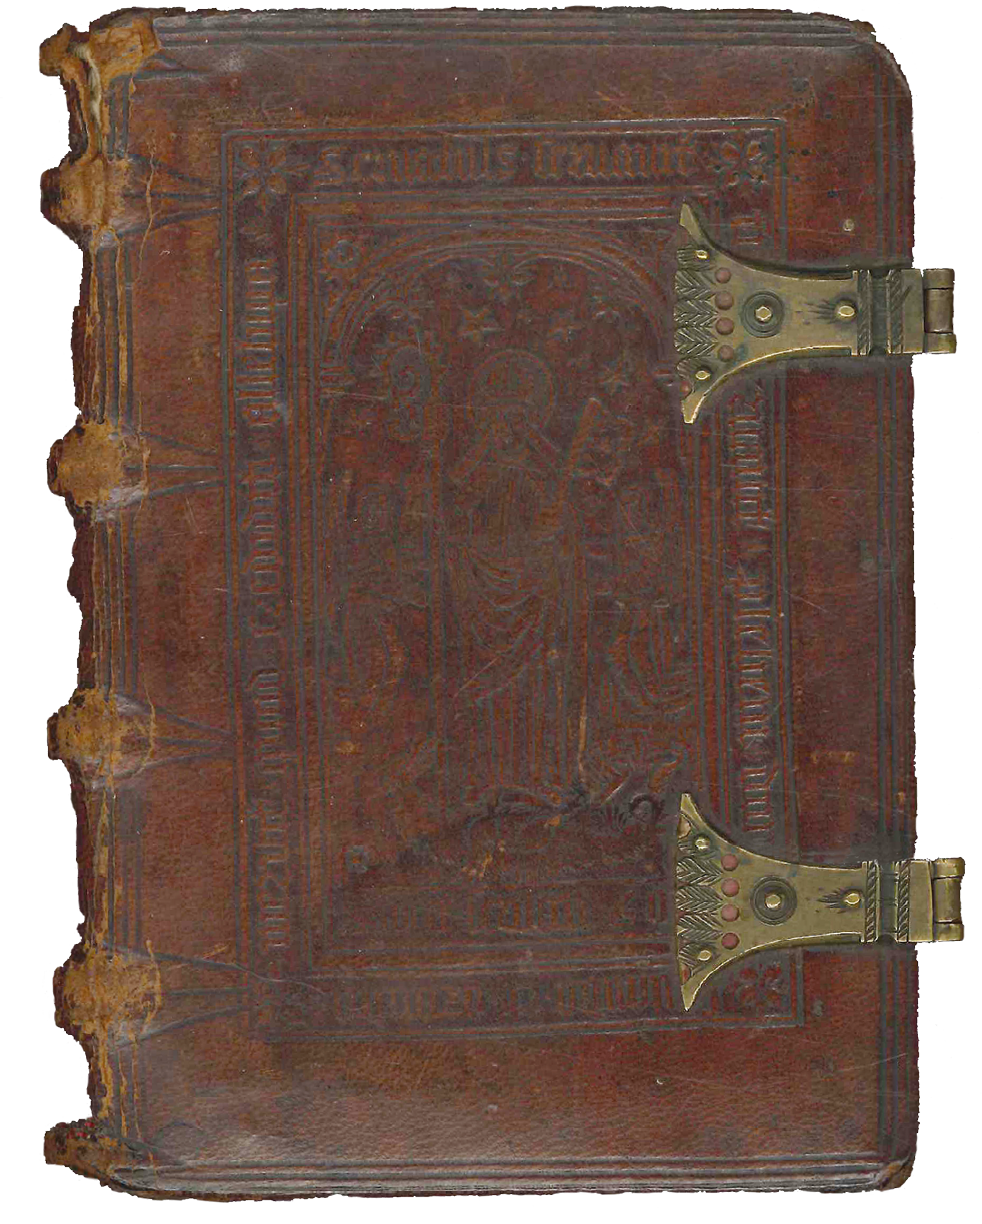 Fig. 9  Manuscript binding, blind stamped leather over boards, made by the beghards of Maastricht c. 1500. Maastricht, Regionaal Historisch Centrum Limburg, 22.001A Handschriften GAM, inv.nr. 462.